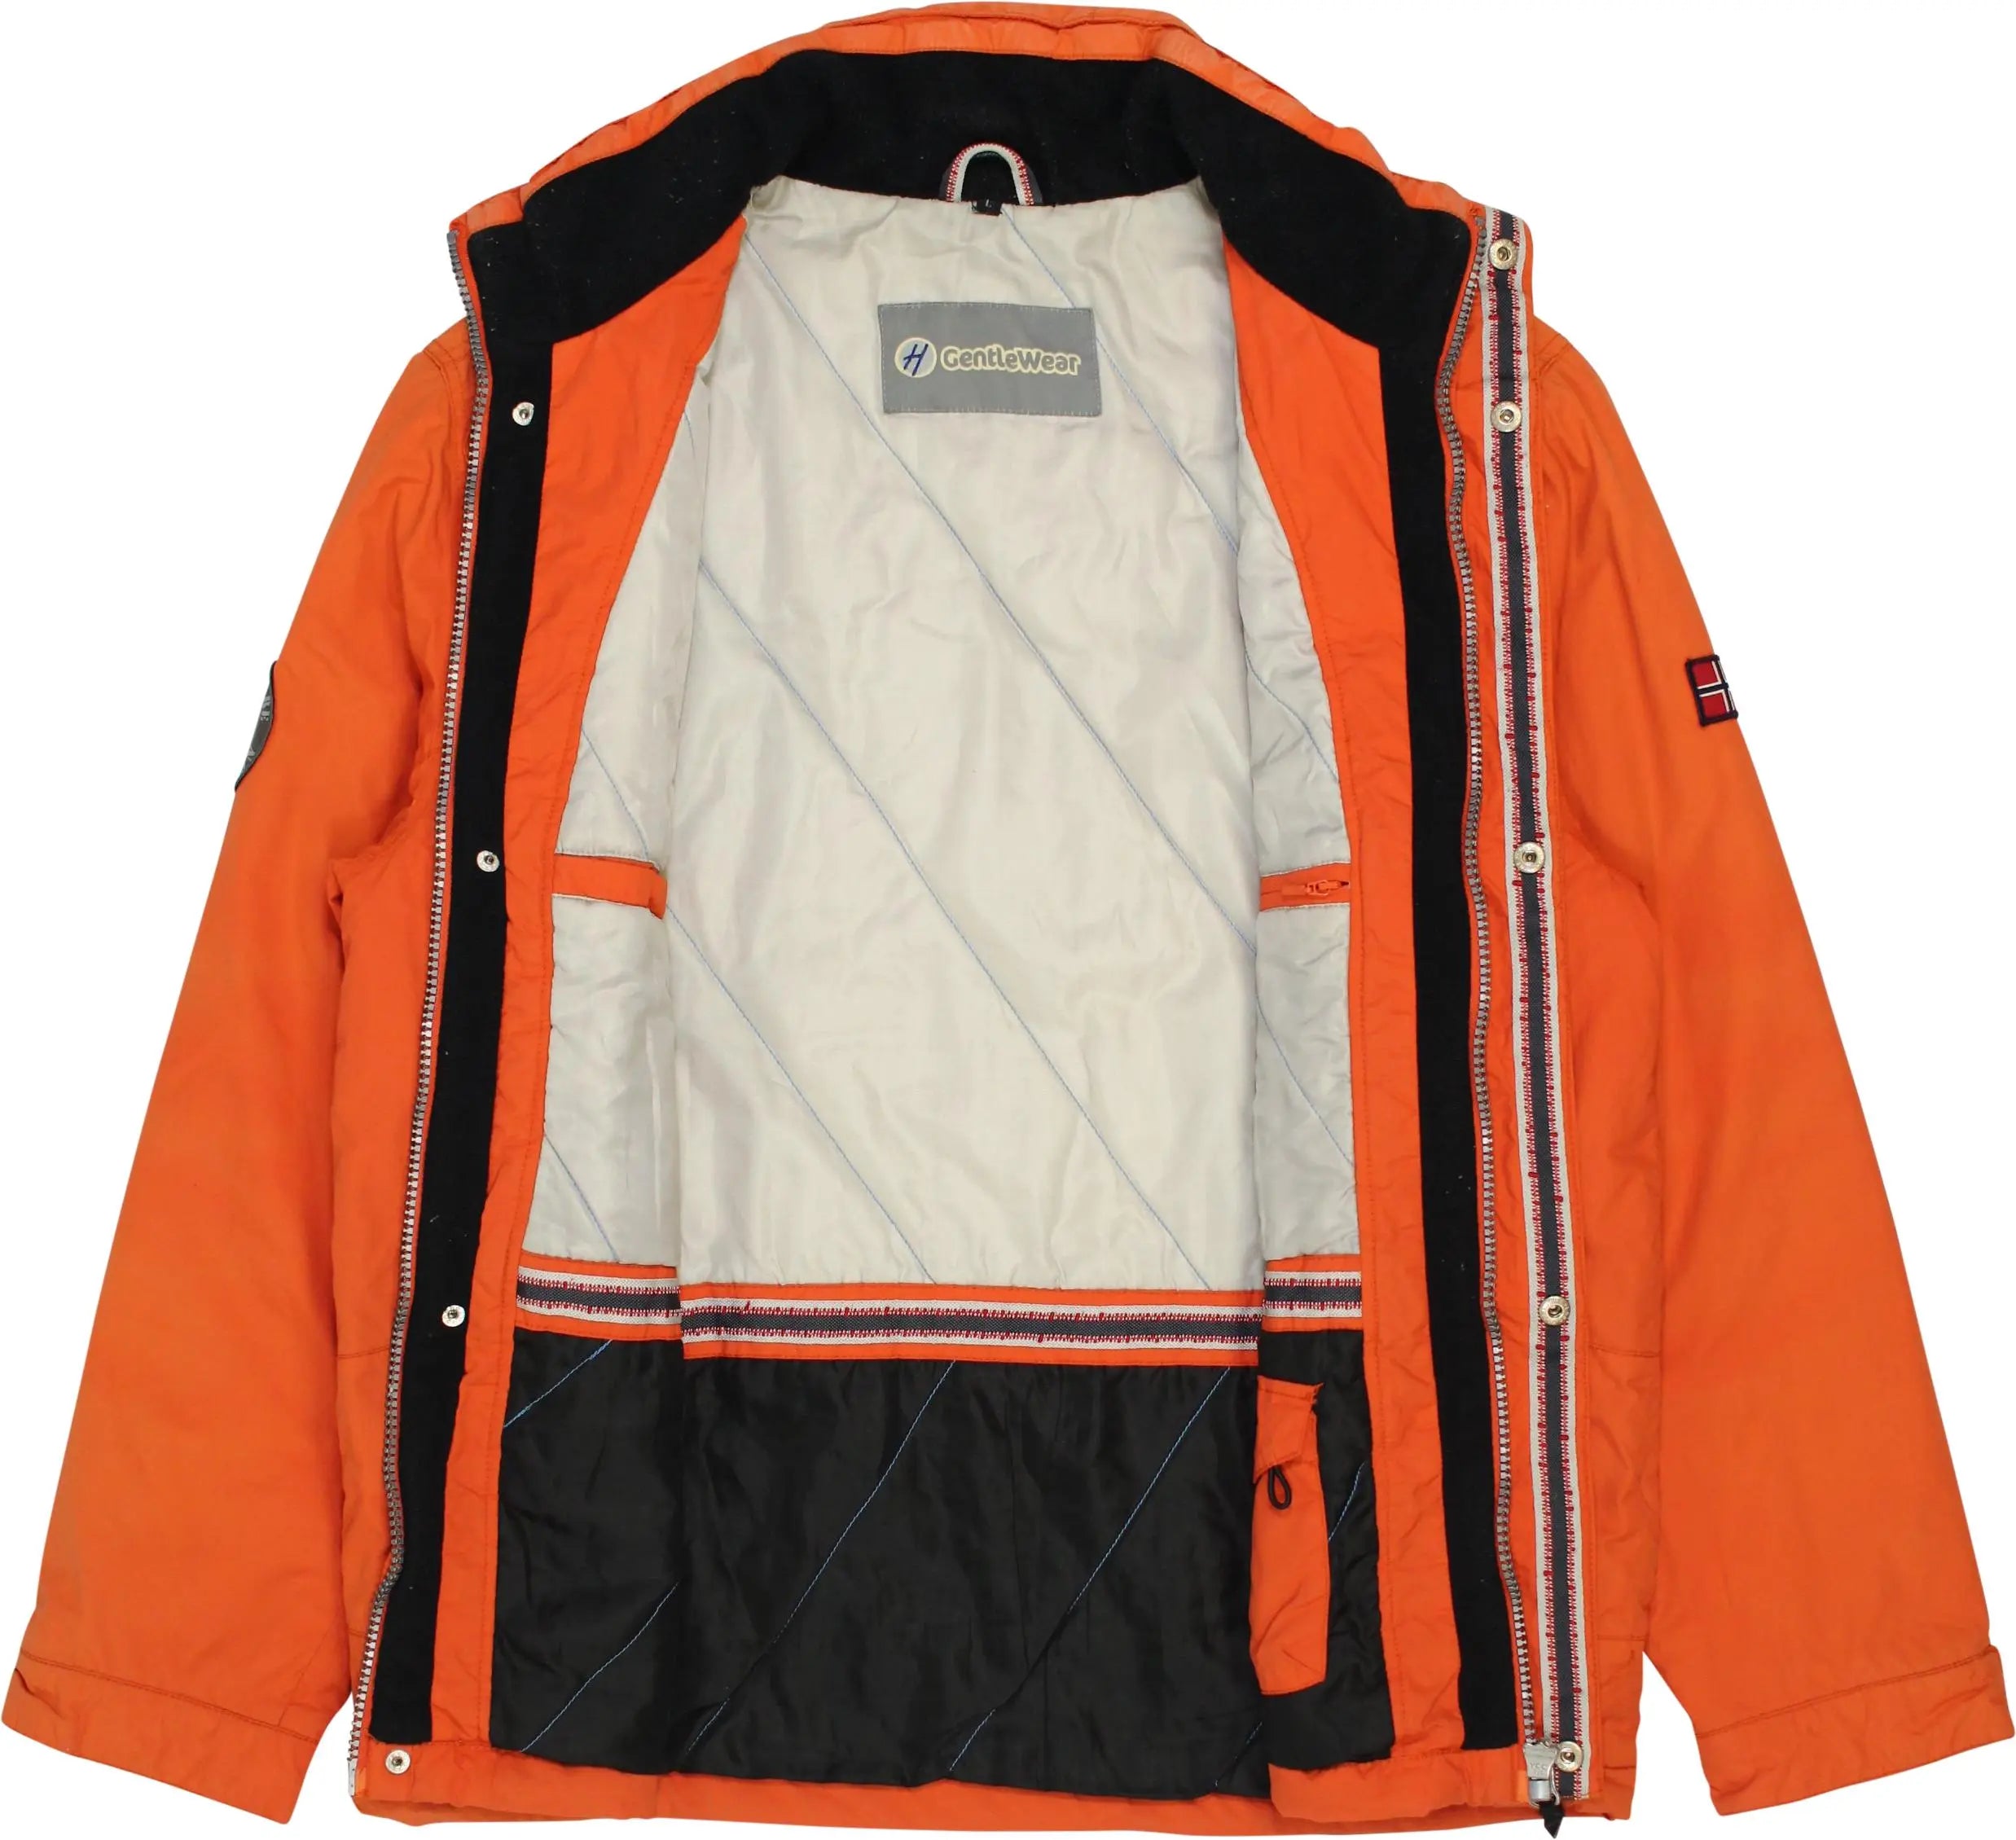 Gentlewear - Orange Winter Jacket- ThriftTale.com - Vintage and second handclothing